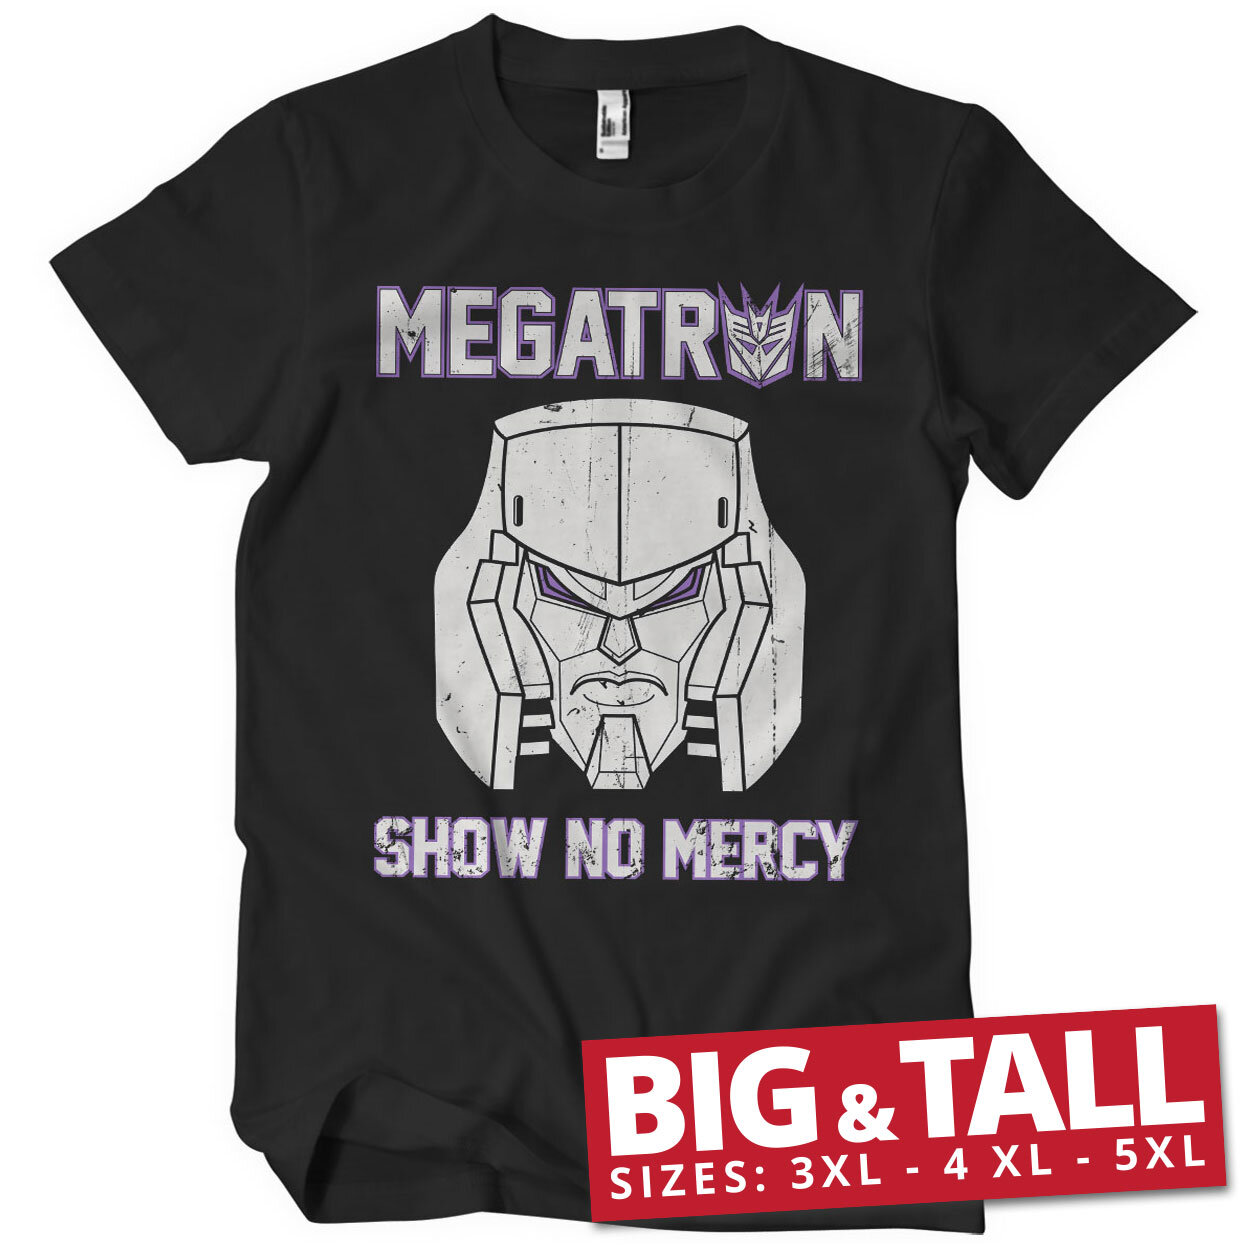 Megatron - Show No Mercy Big & Tall T-Shirt